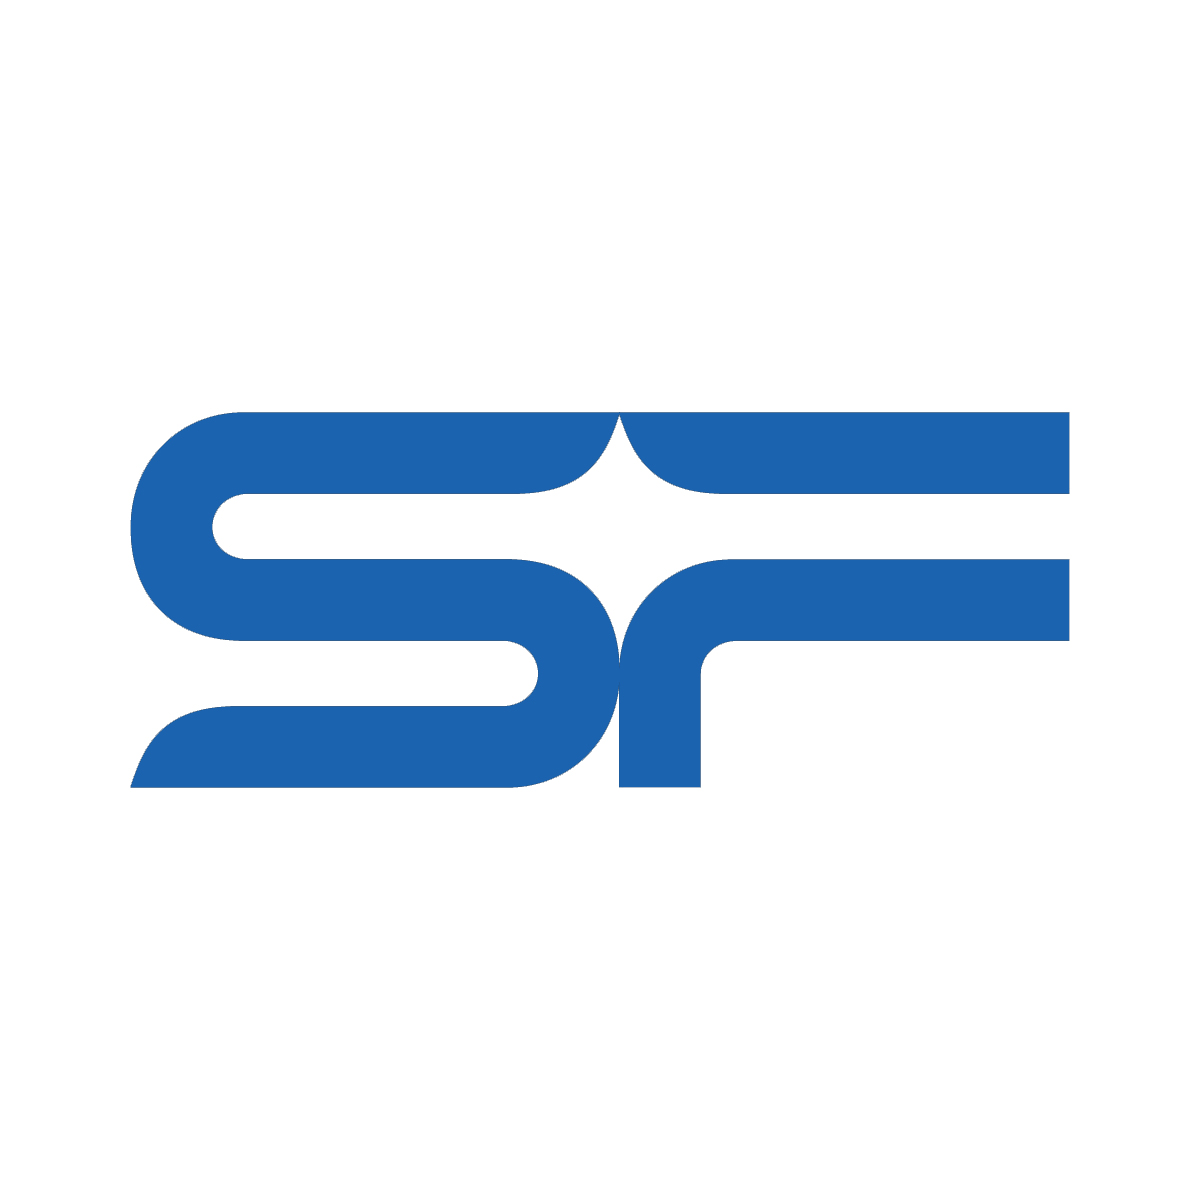 SF_Cinema_logo